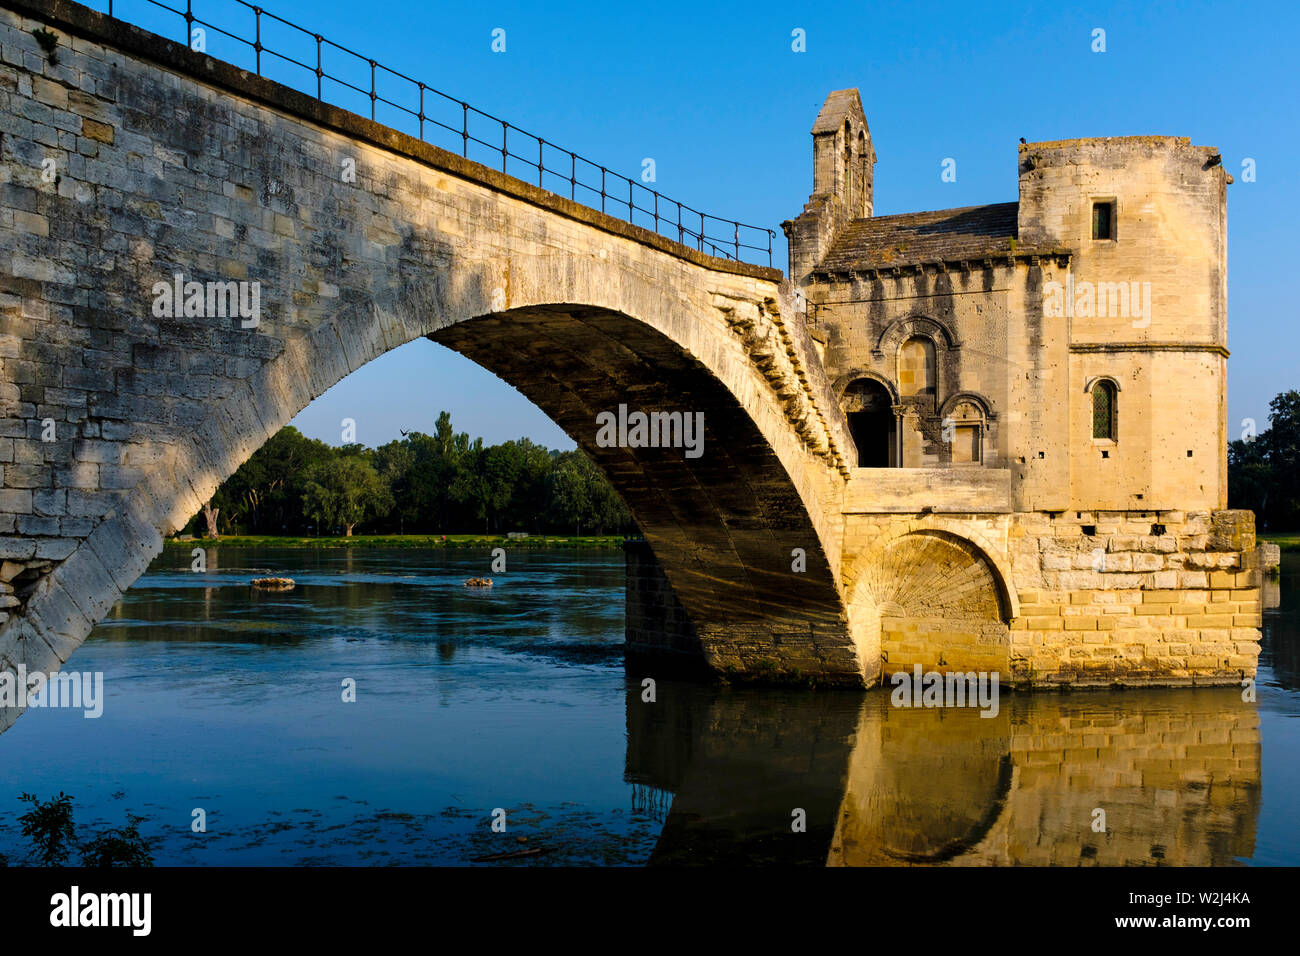 Pont Saint-Bénézet, Avignon, Southern France Stock Photo